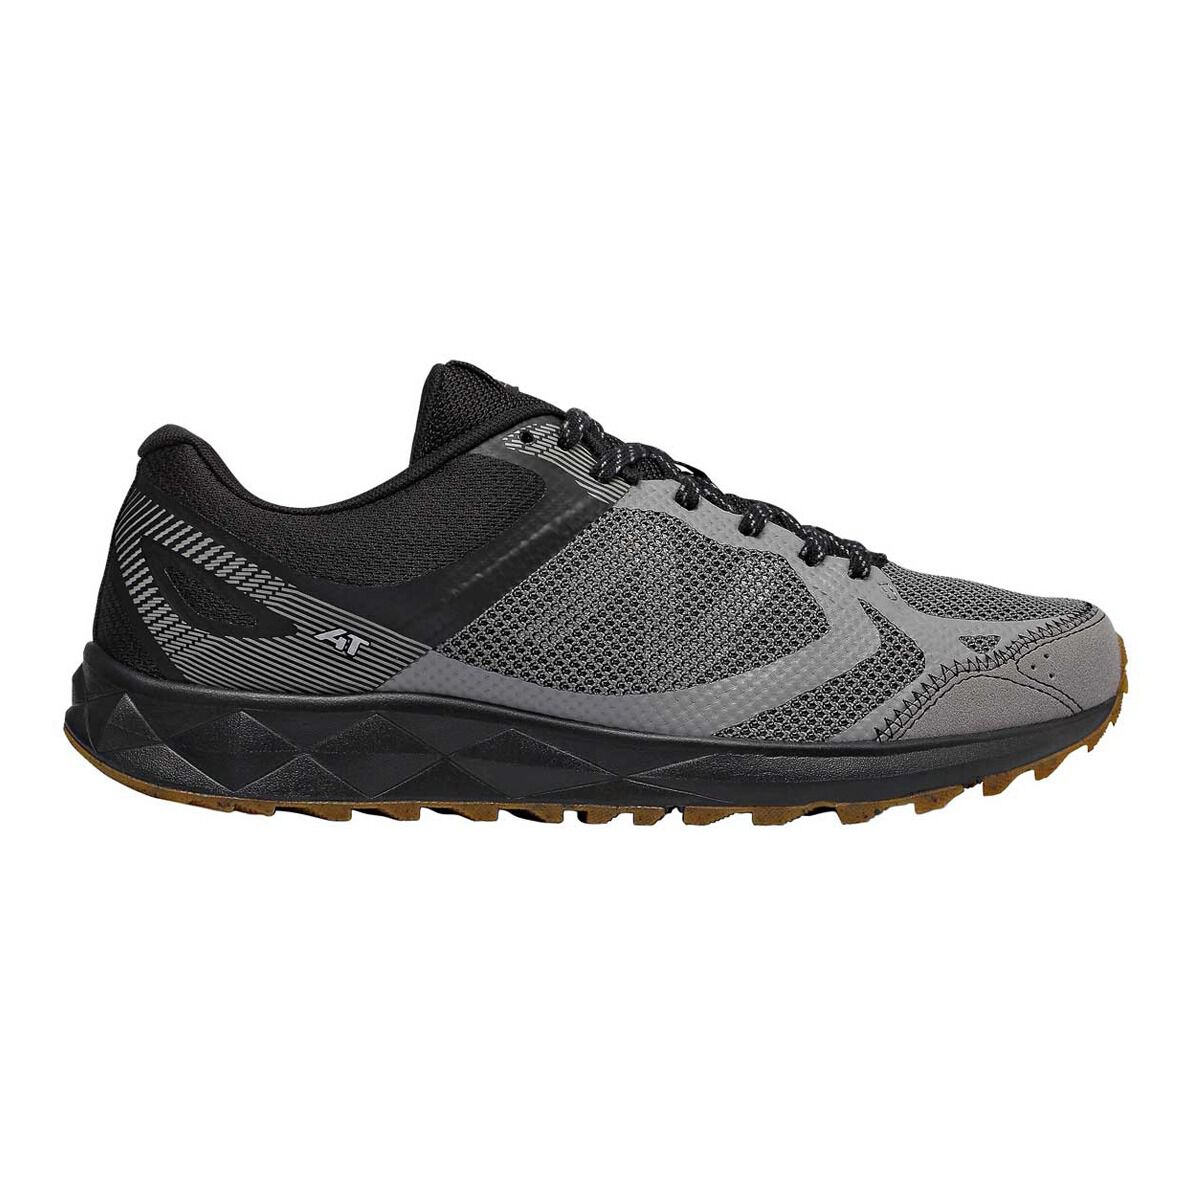 rebel sport trail running shoes